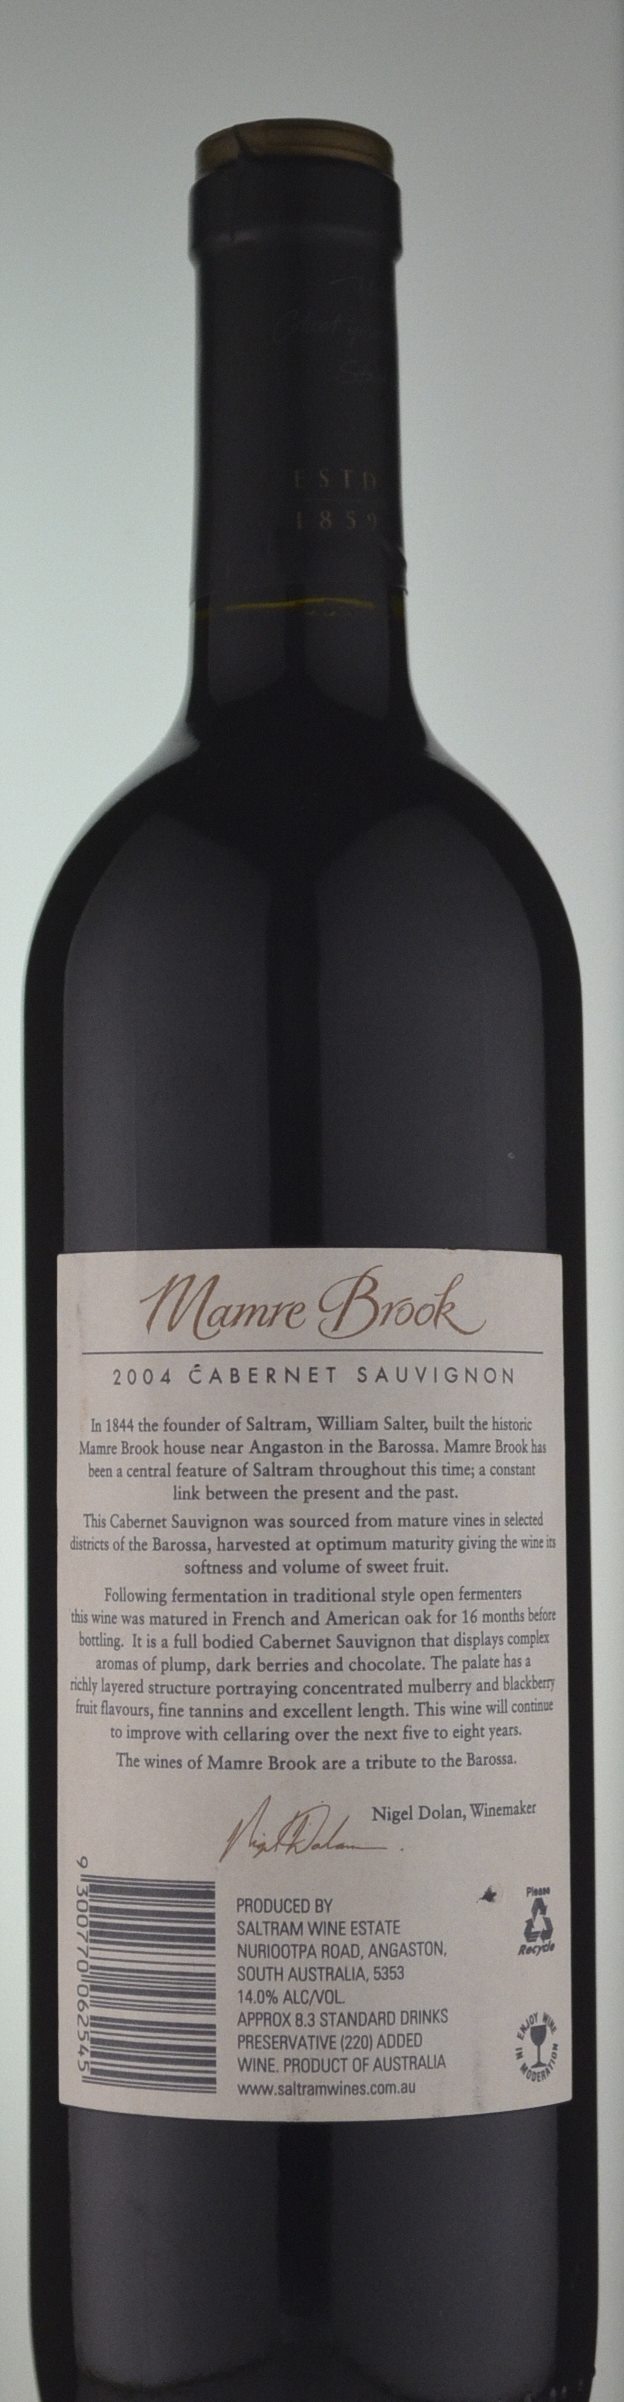 saltram mamre brook cabernet sauvignon 2012 review